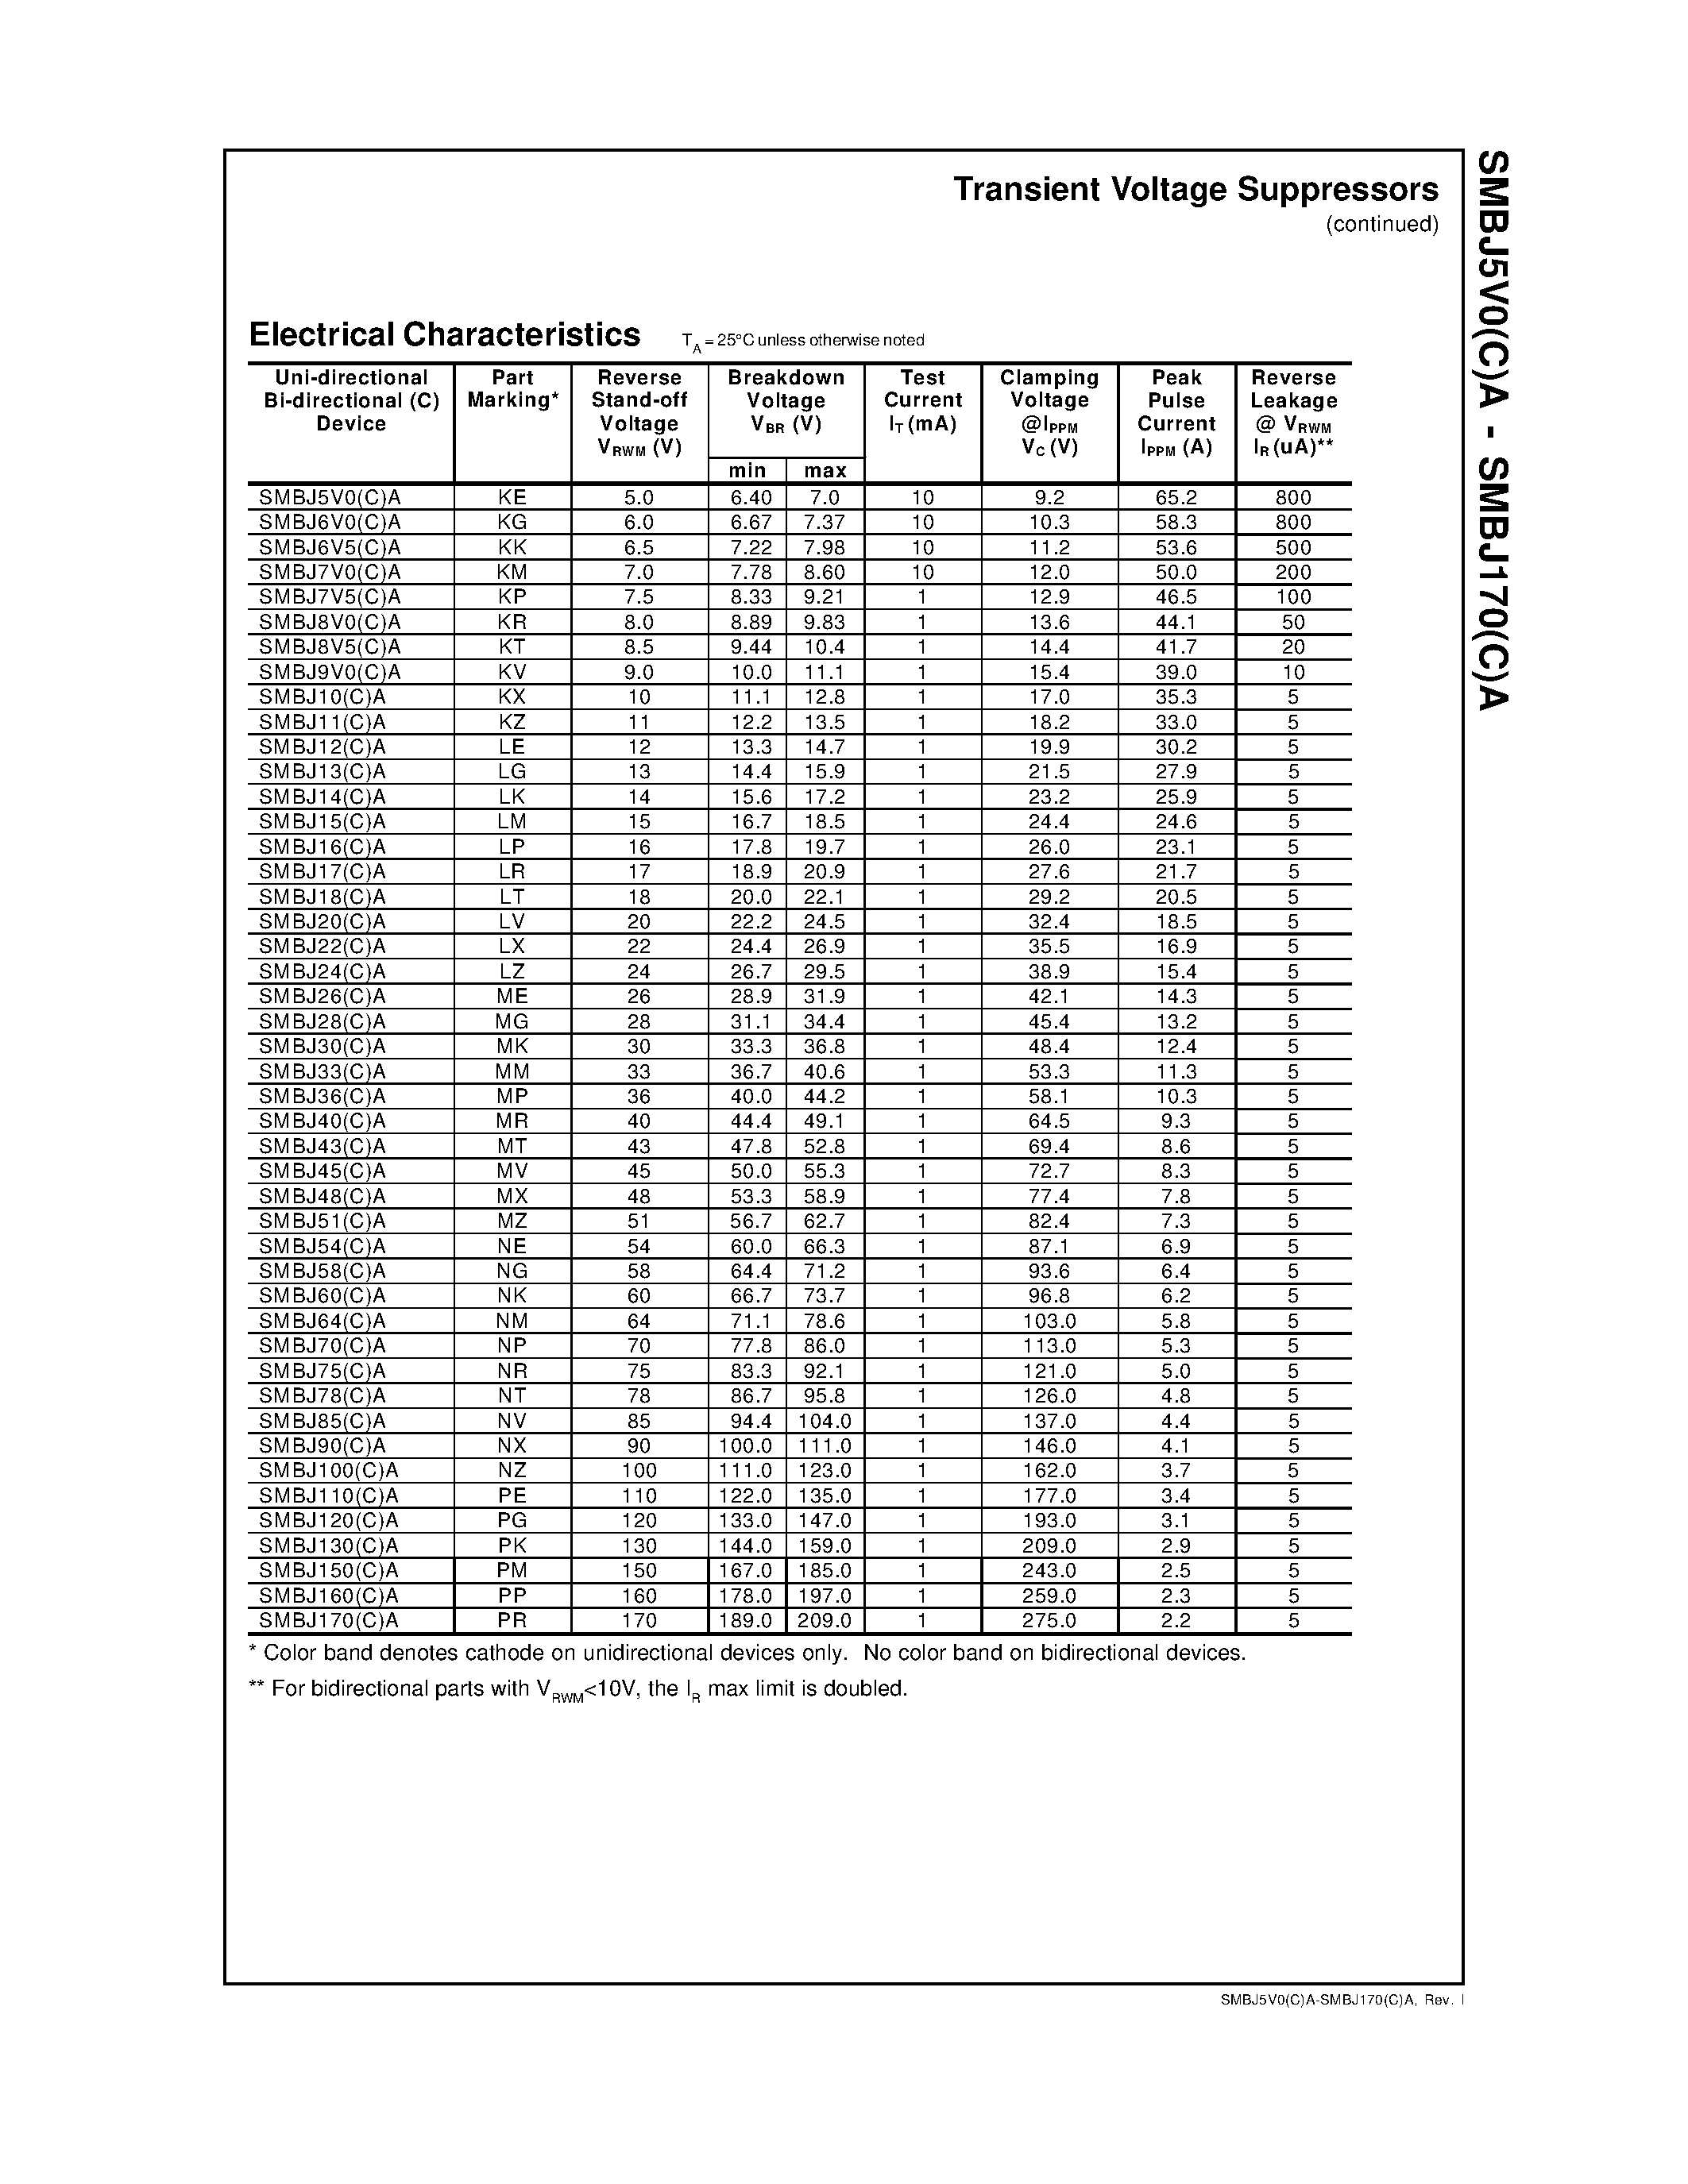 Datasheet SMBJ130A - Transient Voltage Suppressors SMBJ5V0(C)A - SMBJ170(C)A page 2